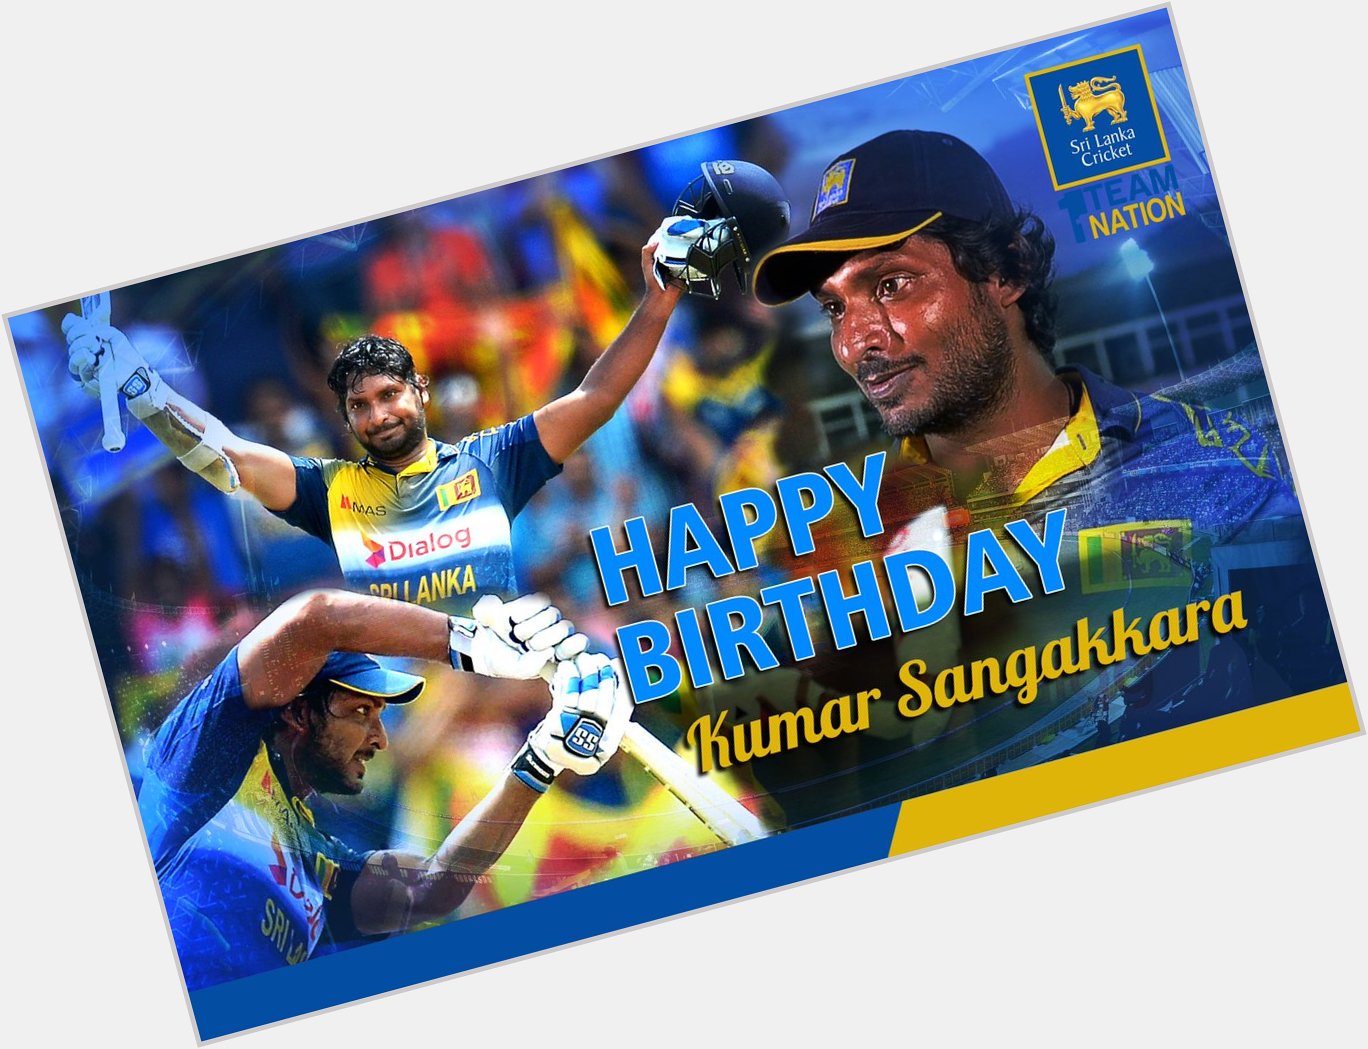 Happy Birthday to one of the greatest batsmen of all time, Kumar Sangakkara! 